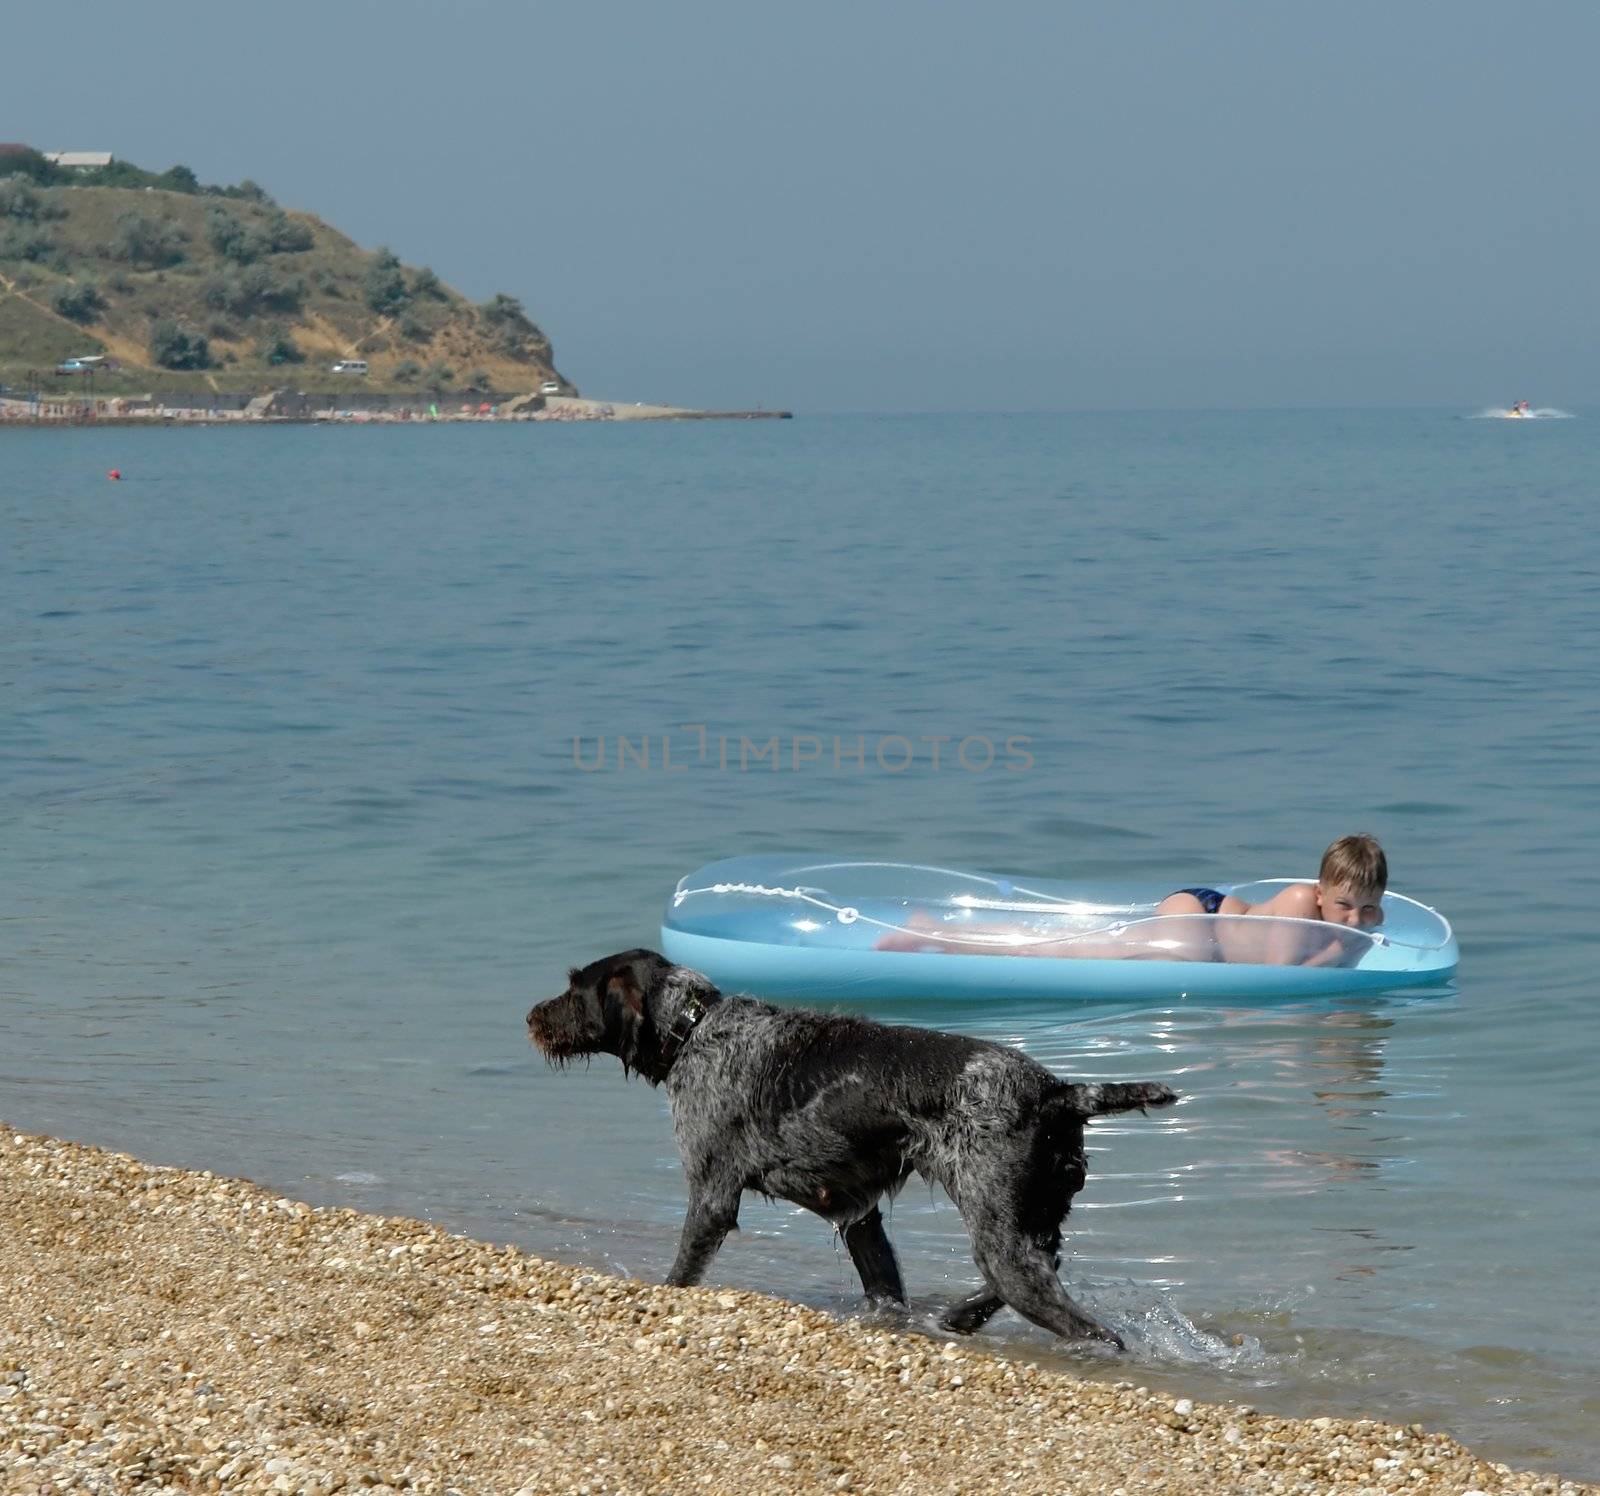 Black dog runs on the beach. Boy will swim on the inflatable boat.